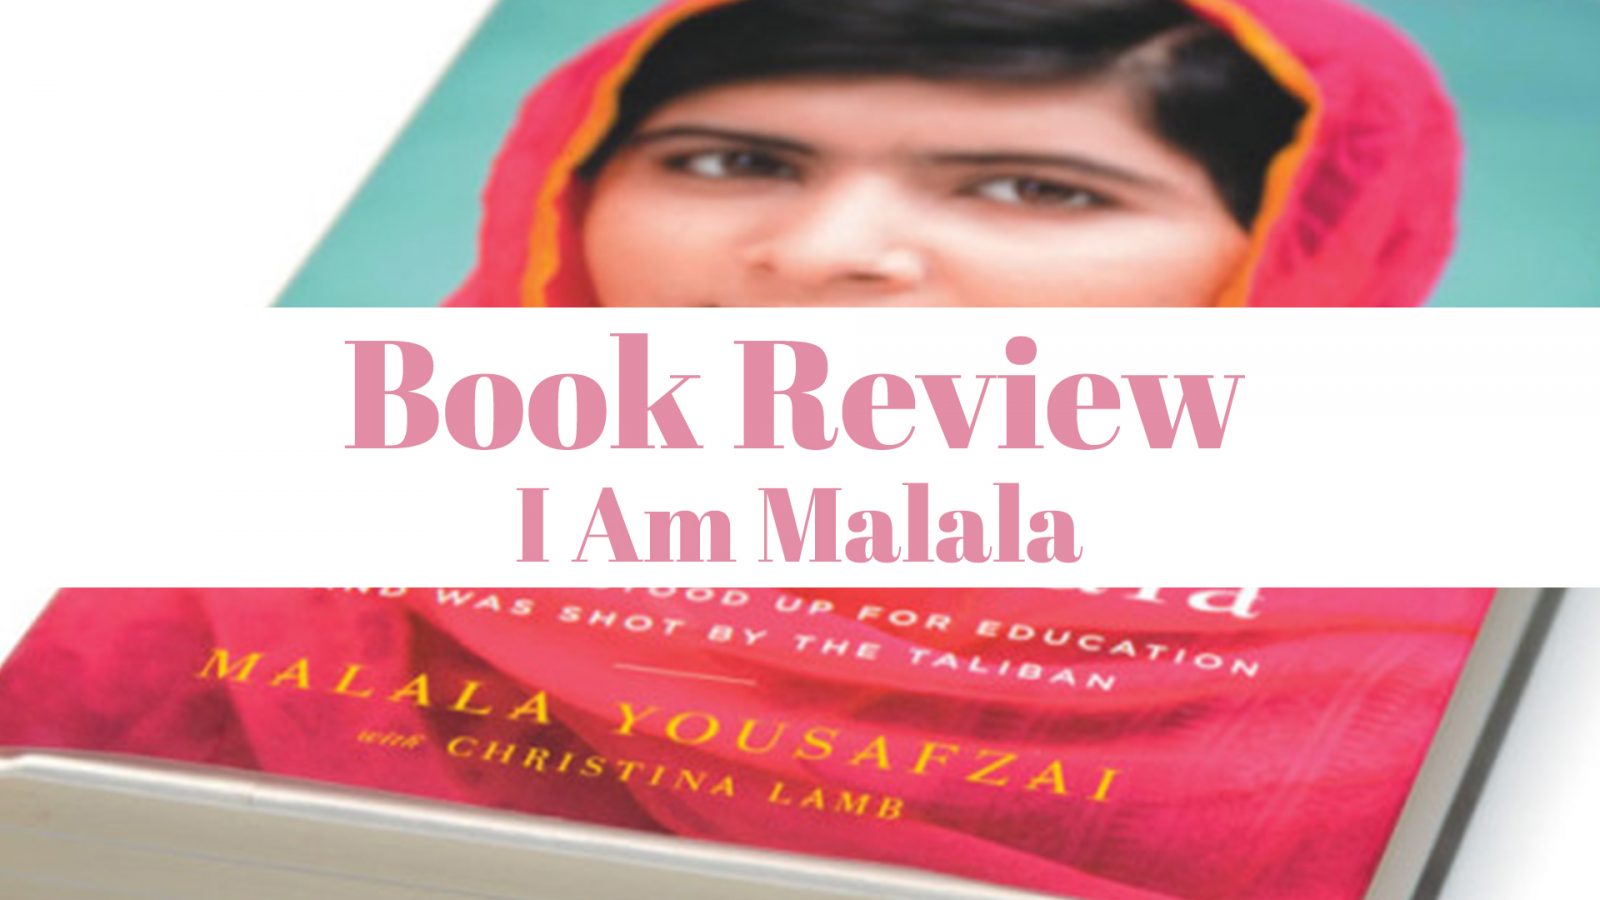 I Am Malala: Book Review